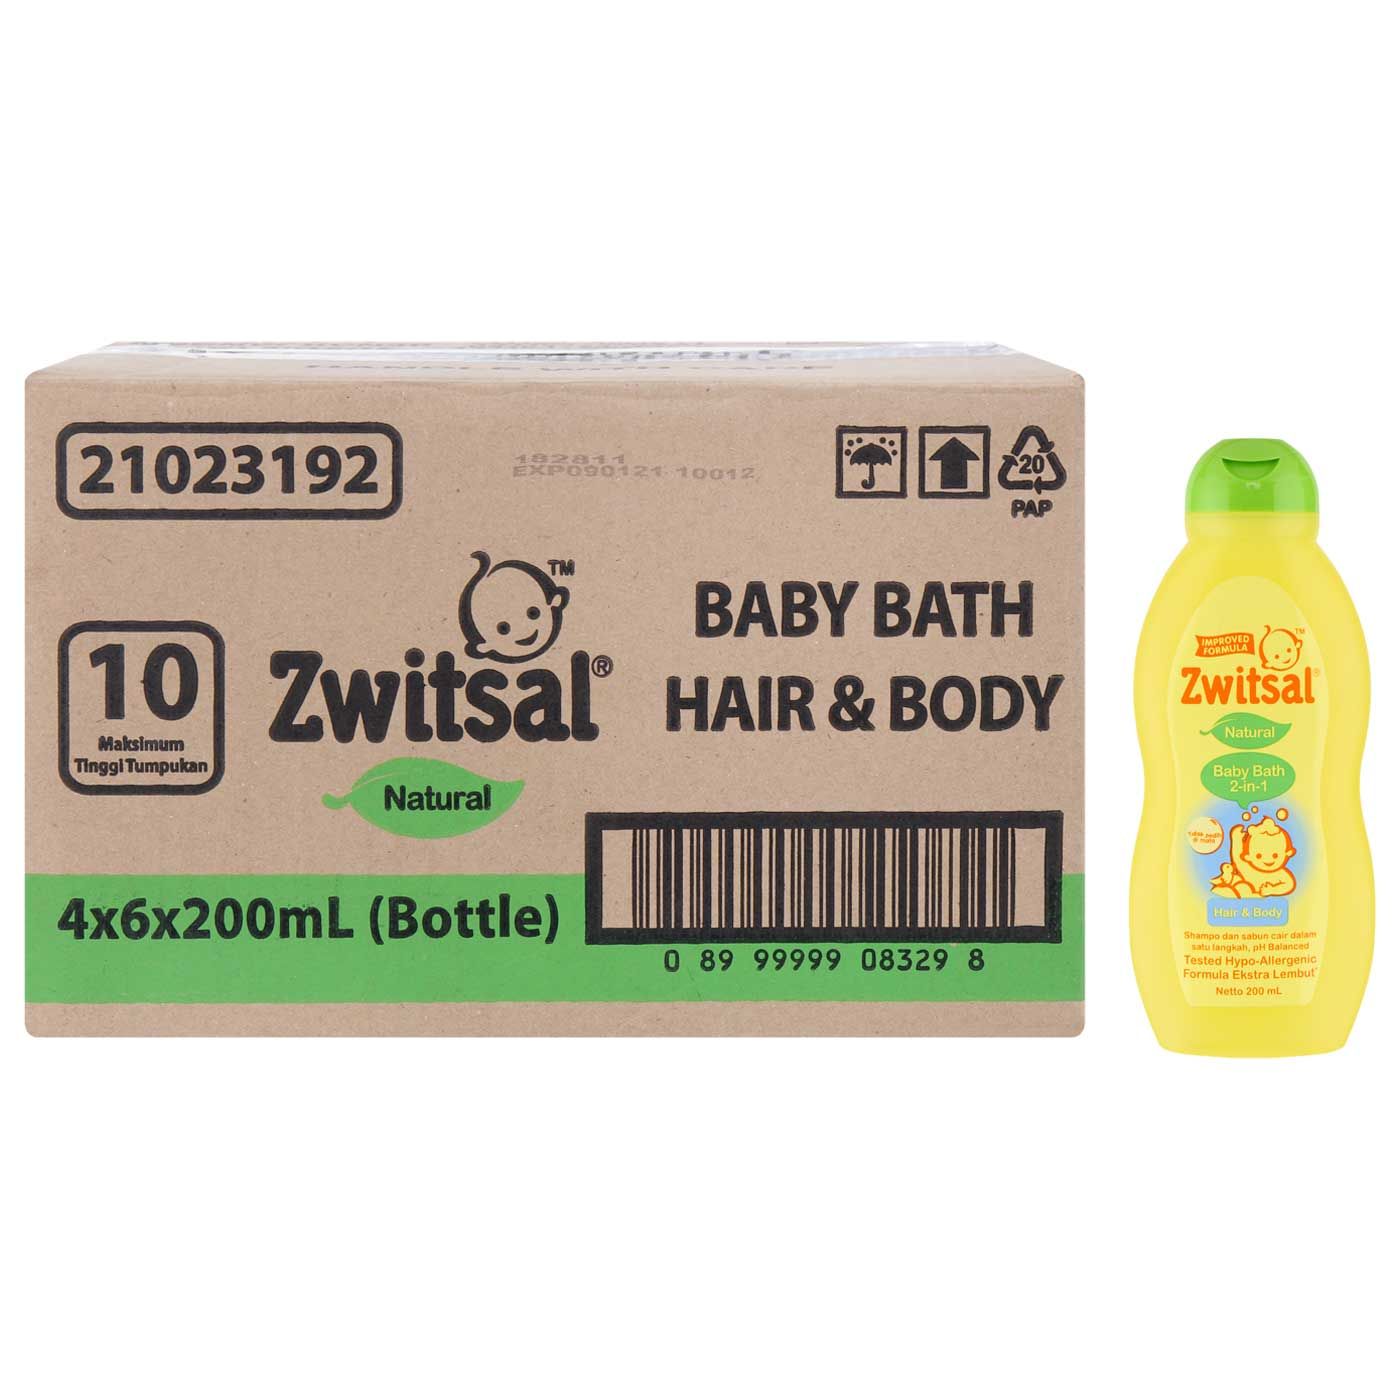 Zwitsal Natural Baby Bath Hair & Body 200Ml - 3